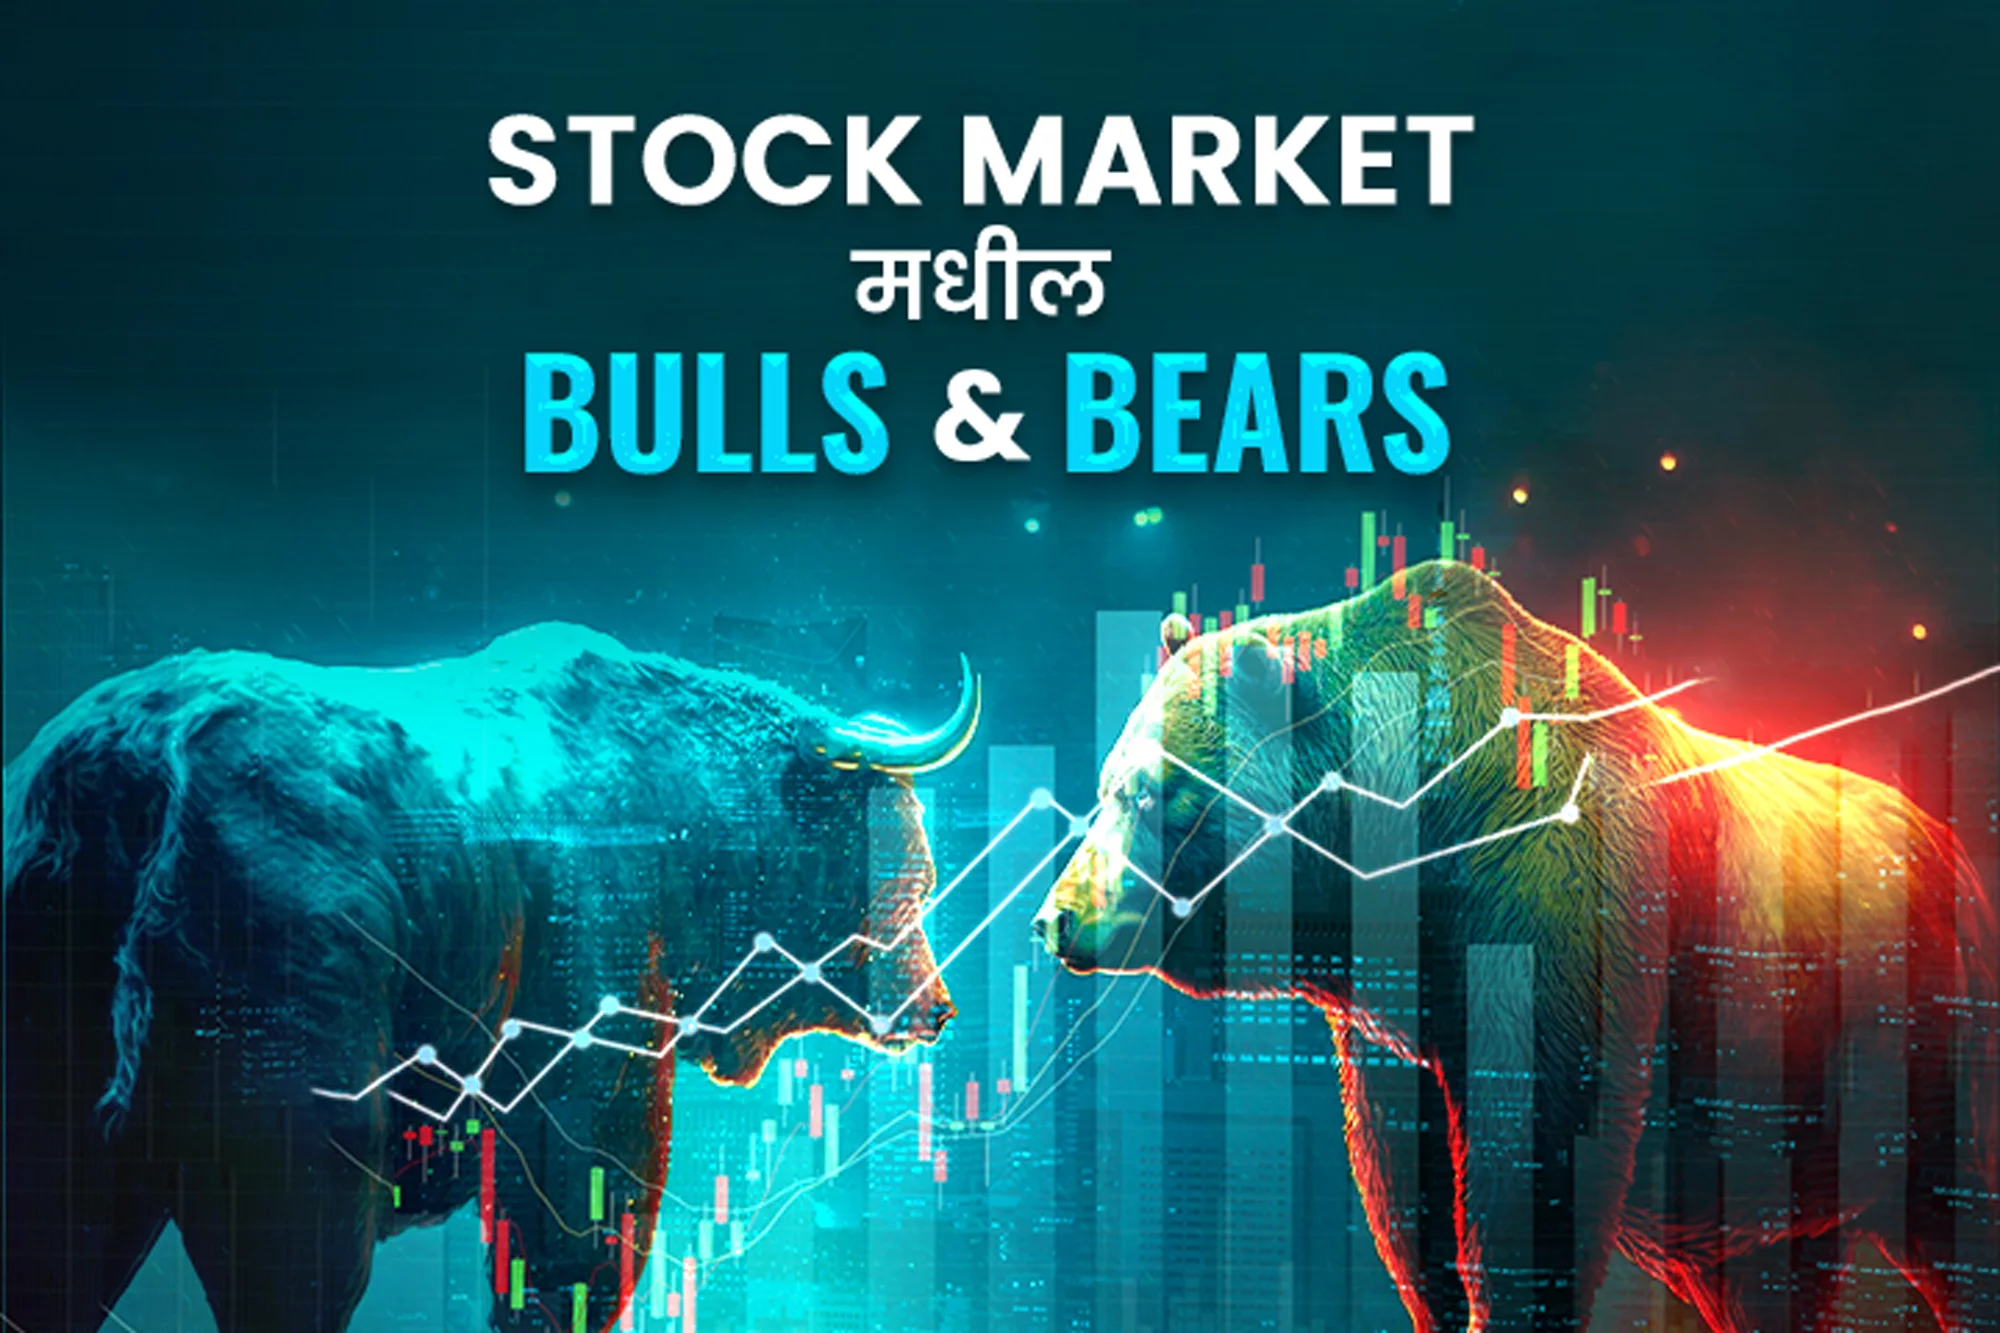 Stock Market Wallpaper Images - Free Download on Freepik